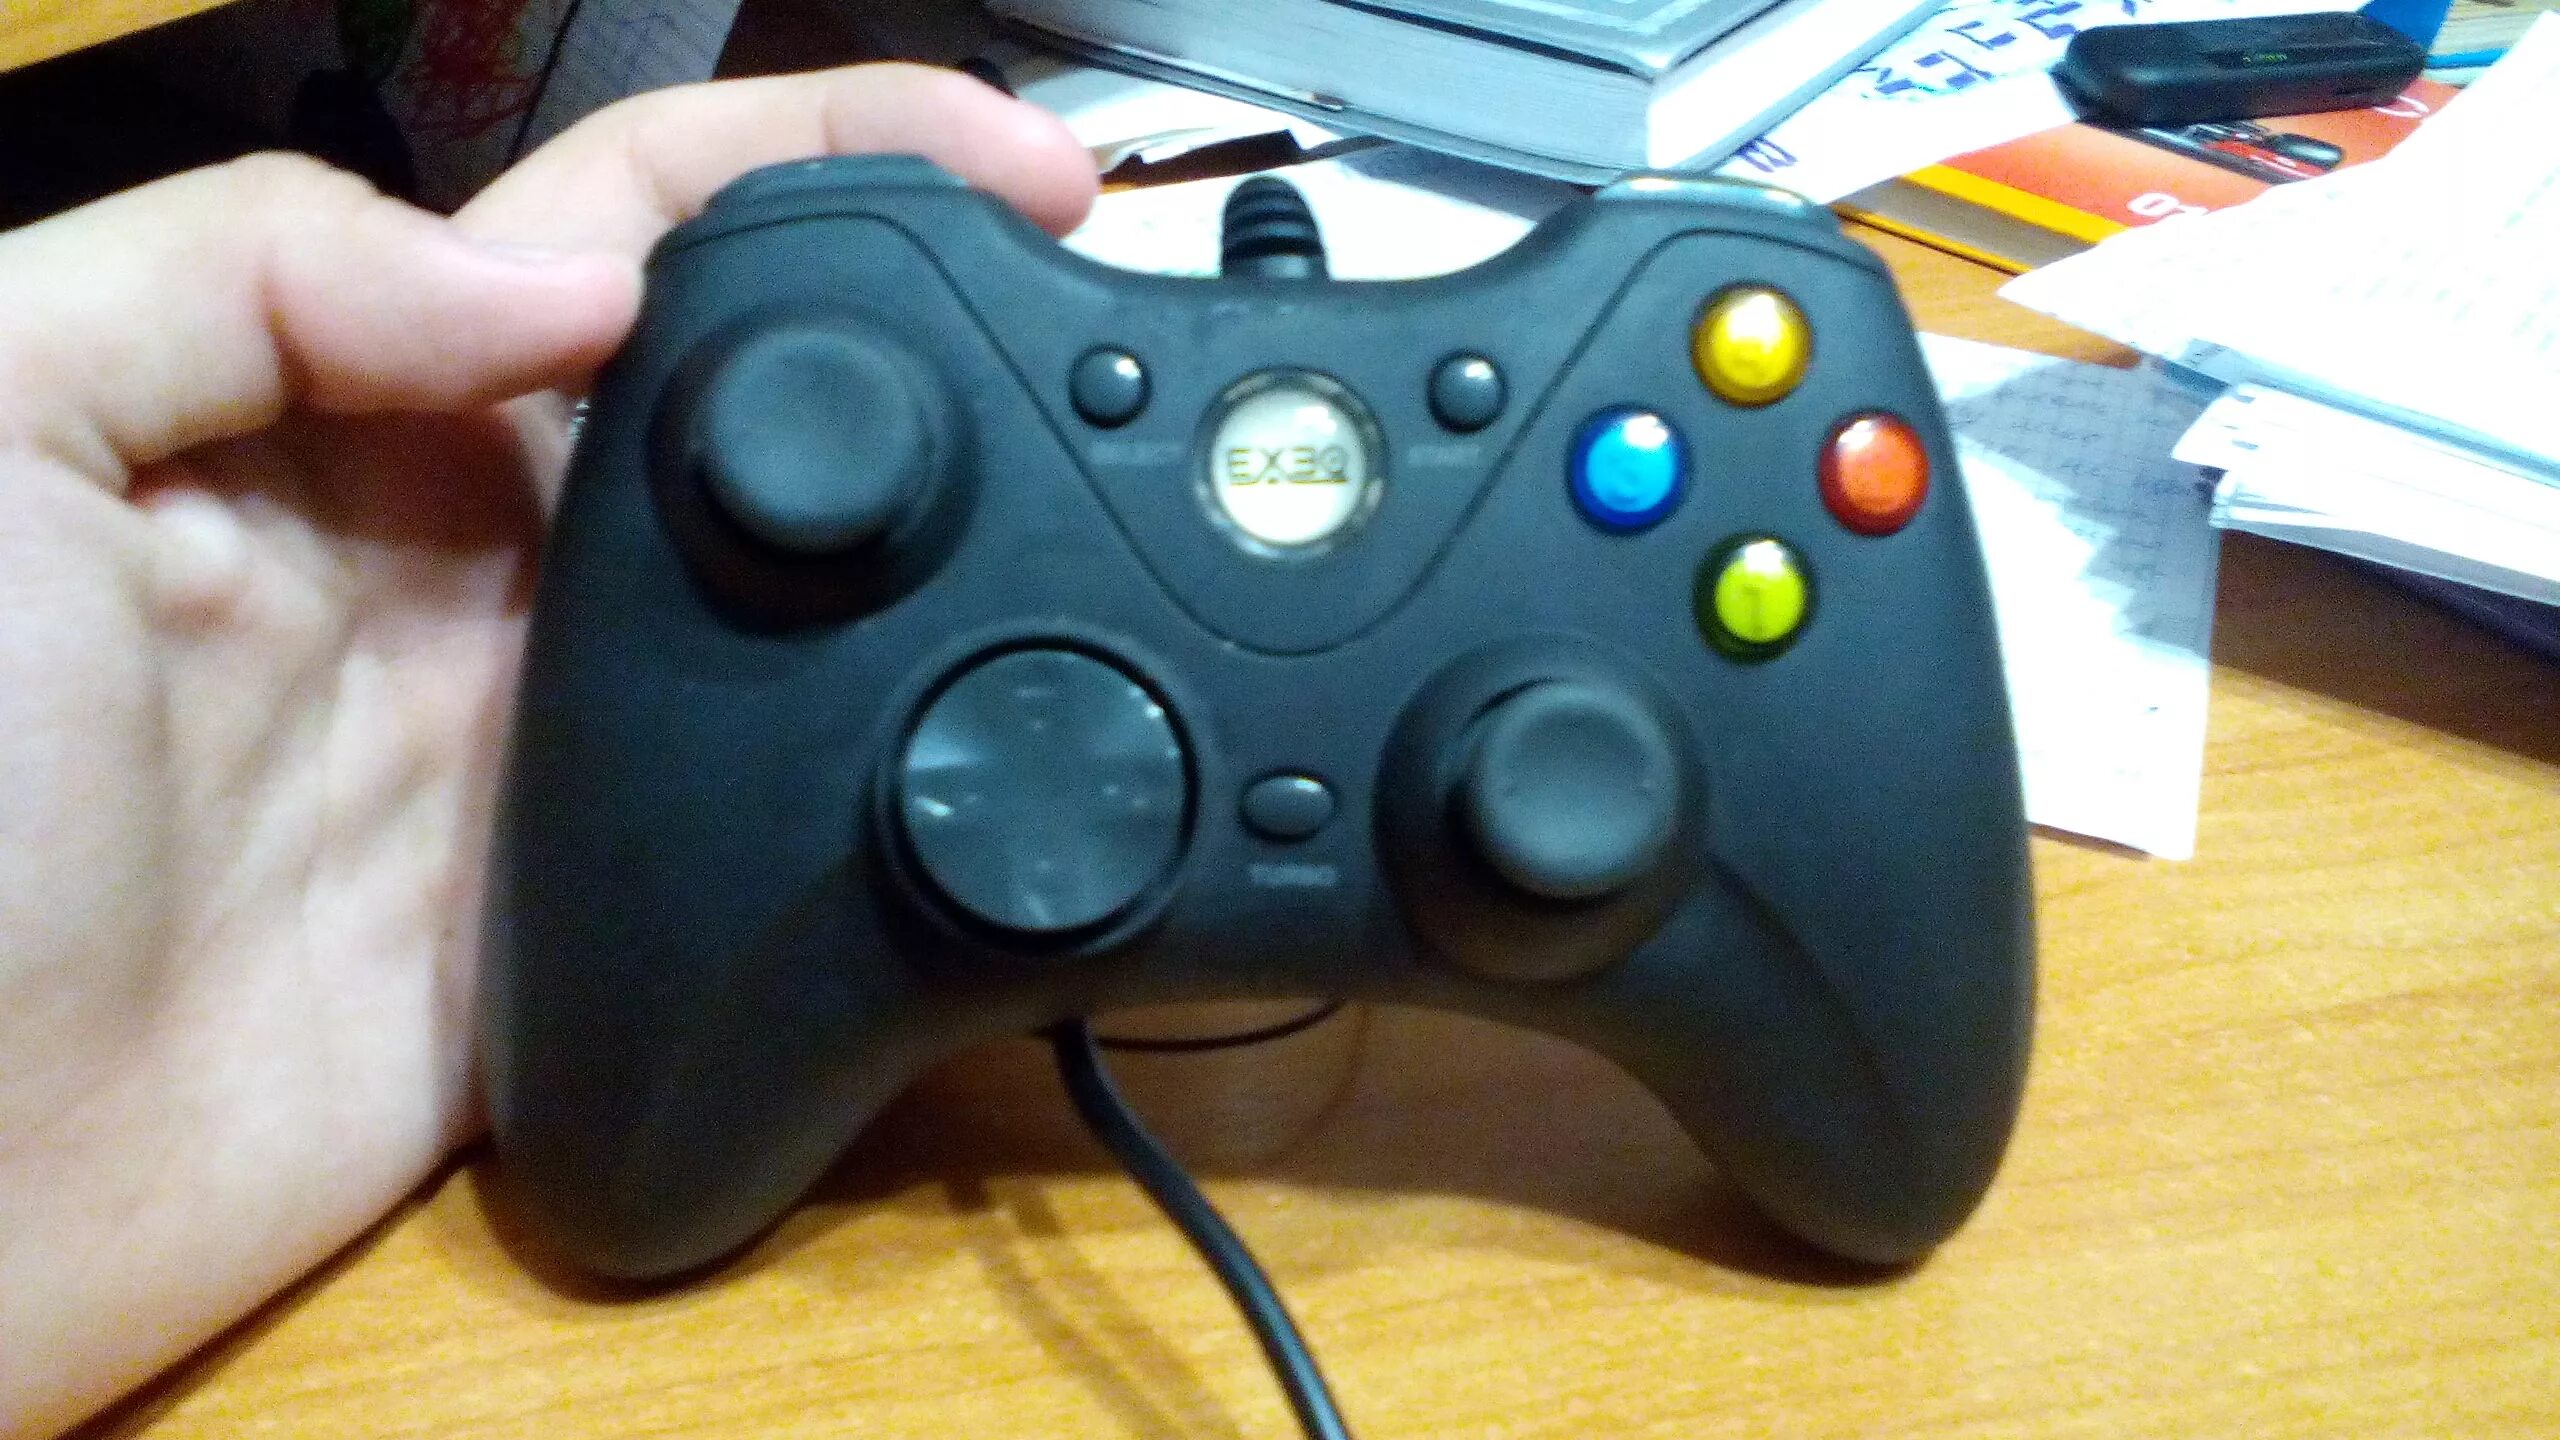 Джойстик DC Xbox 360. Lb на джойстике Xbox 360. Геймпад Hori Onyx Plus Wireless Controller ps4, черный. Кнопка RB на джойстике Xbox 360. Как исправить джойстик